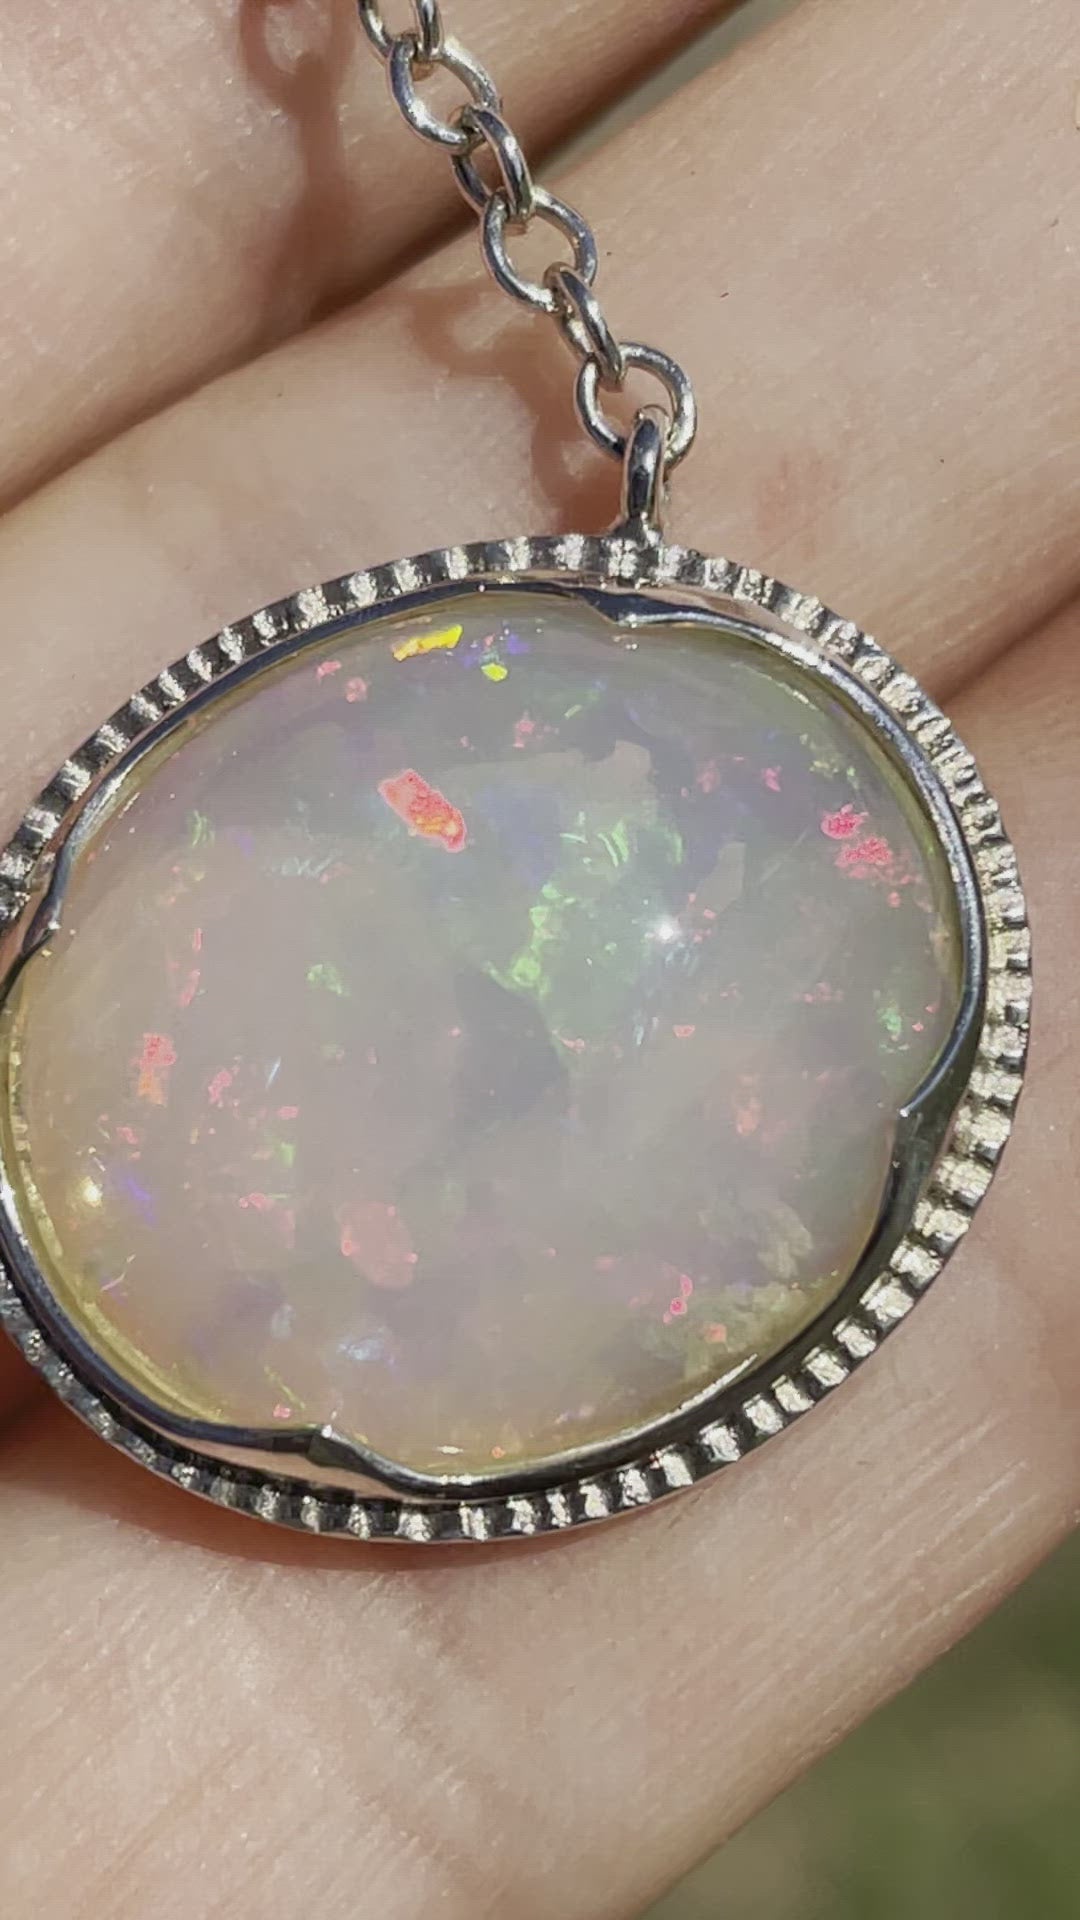 Vintage Australian Opal & Diamond Necklace - Gem